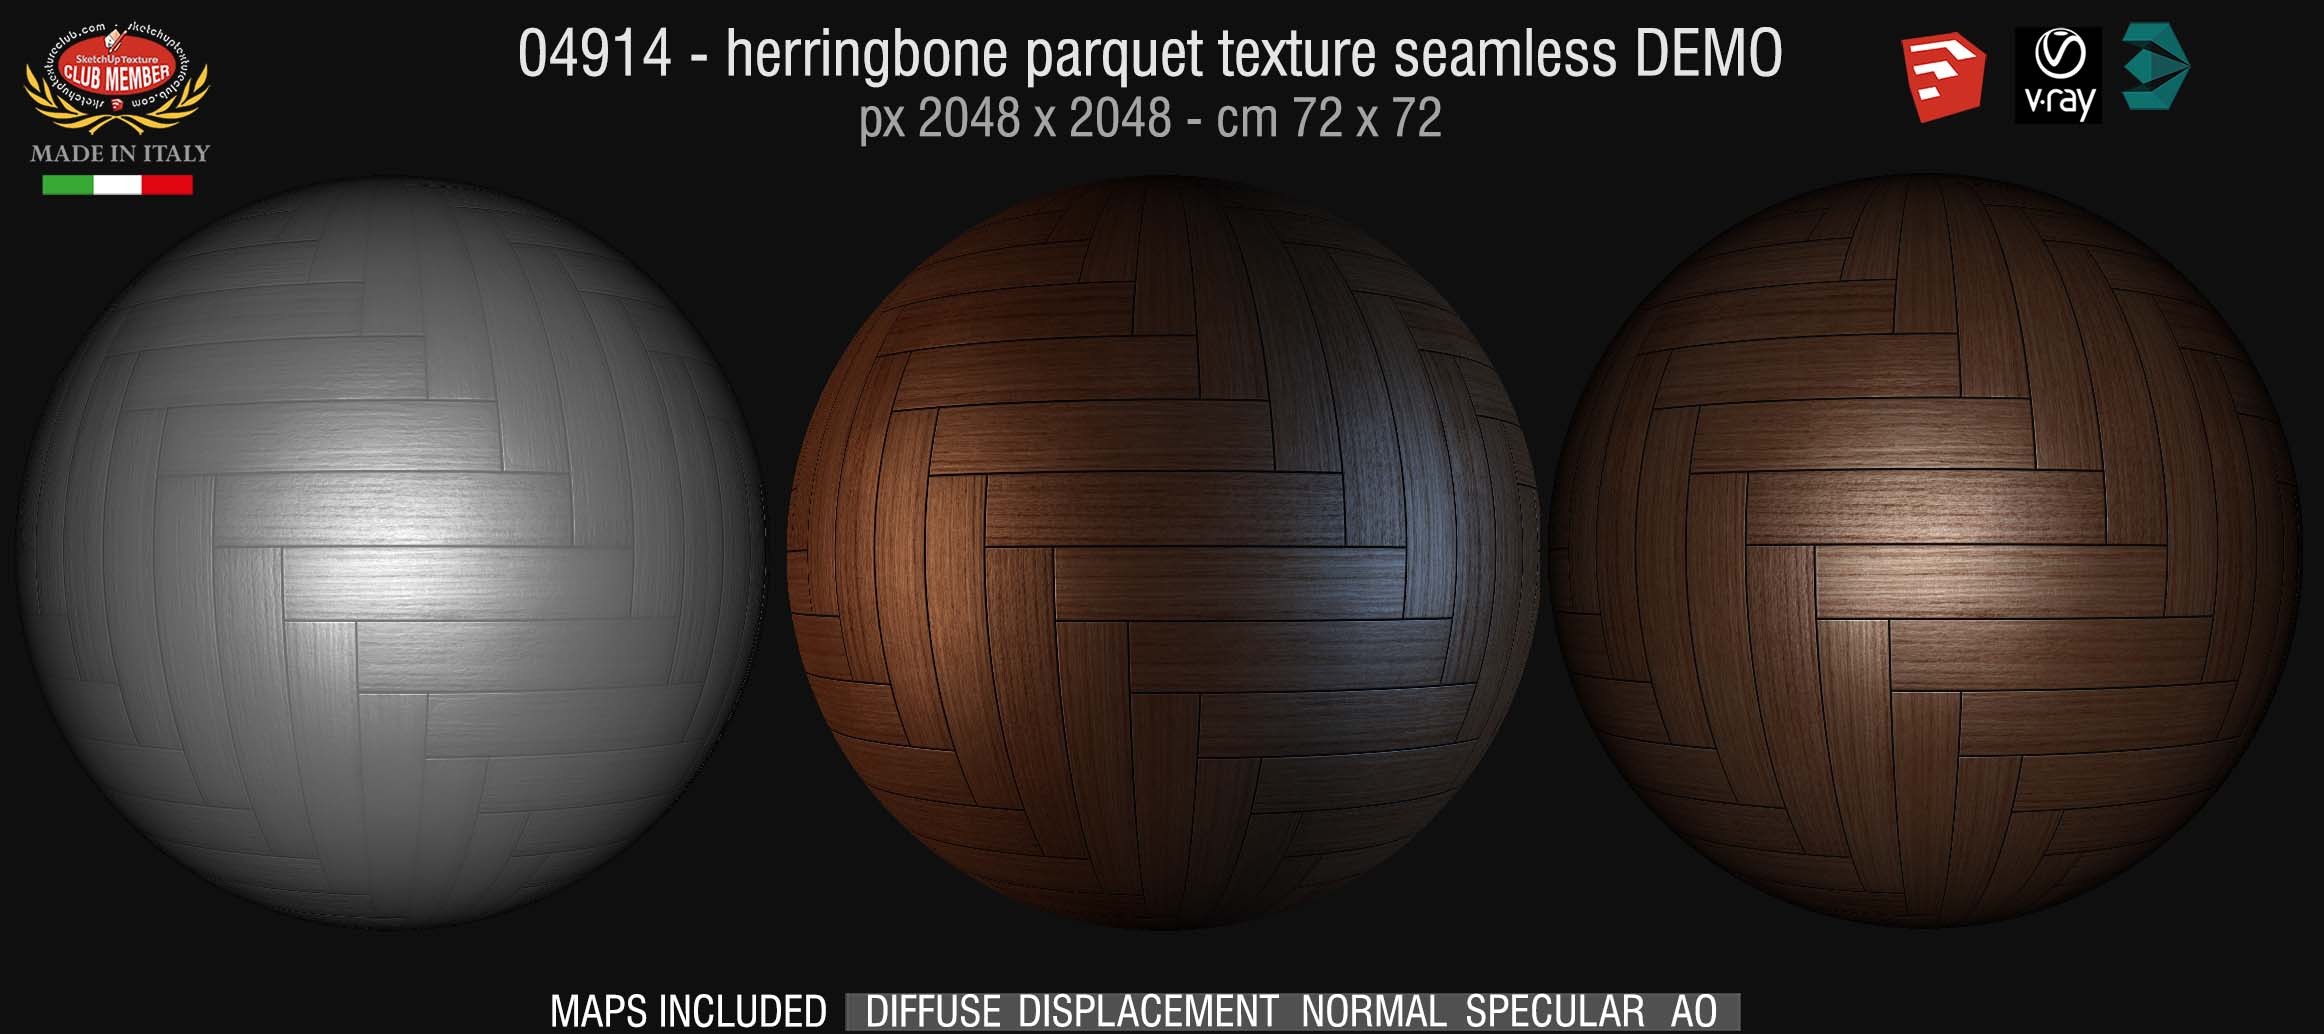 04914 HR  Herringbone parquet texture seamless + maps DEMO